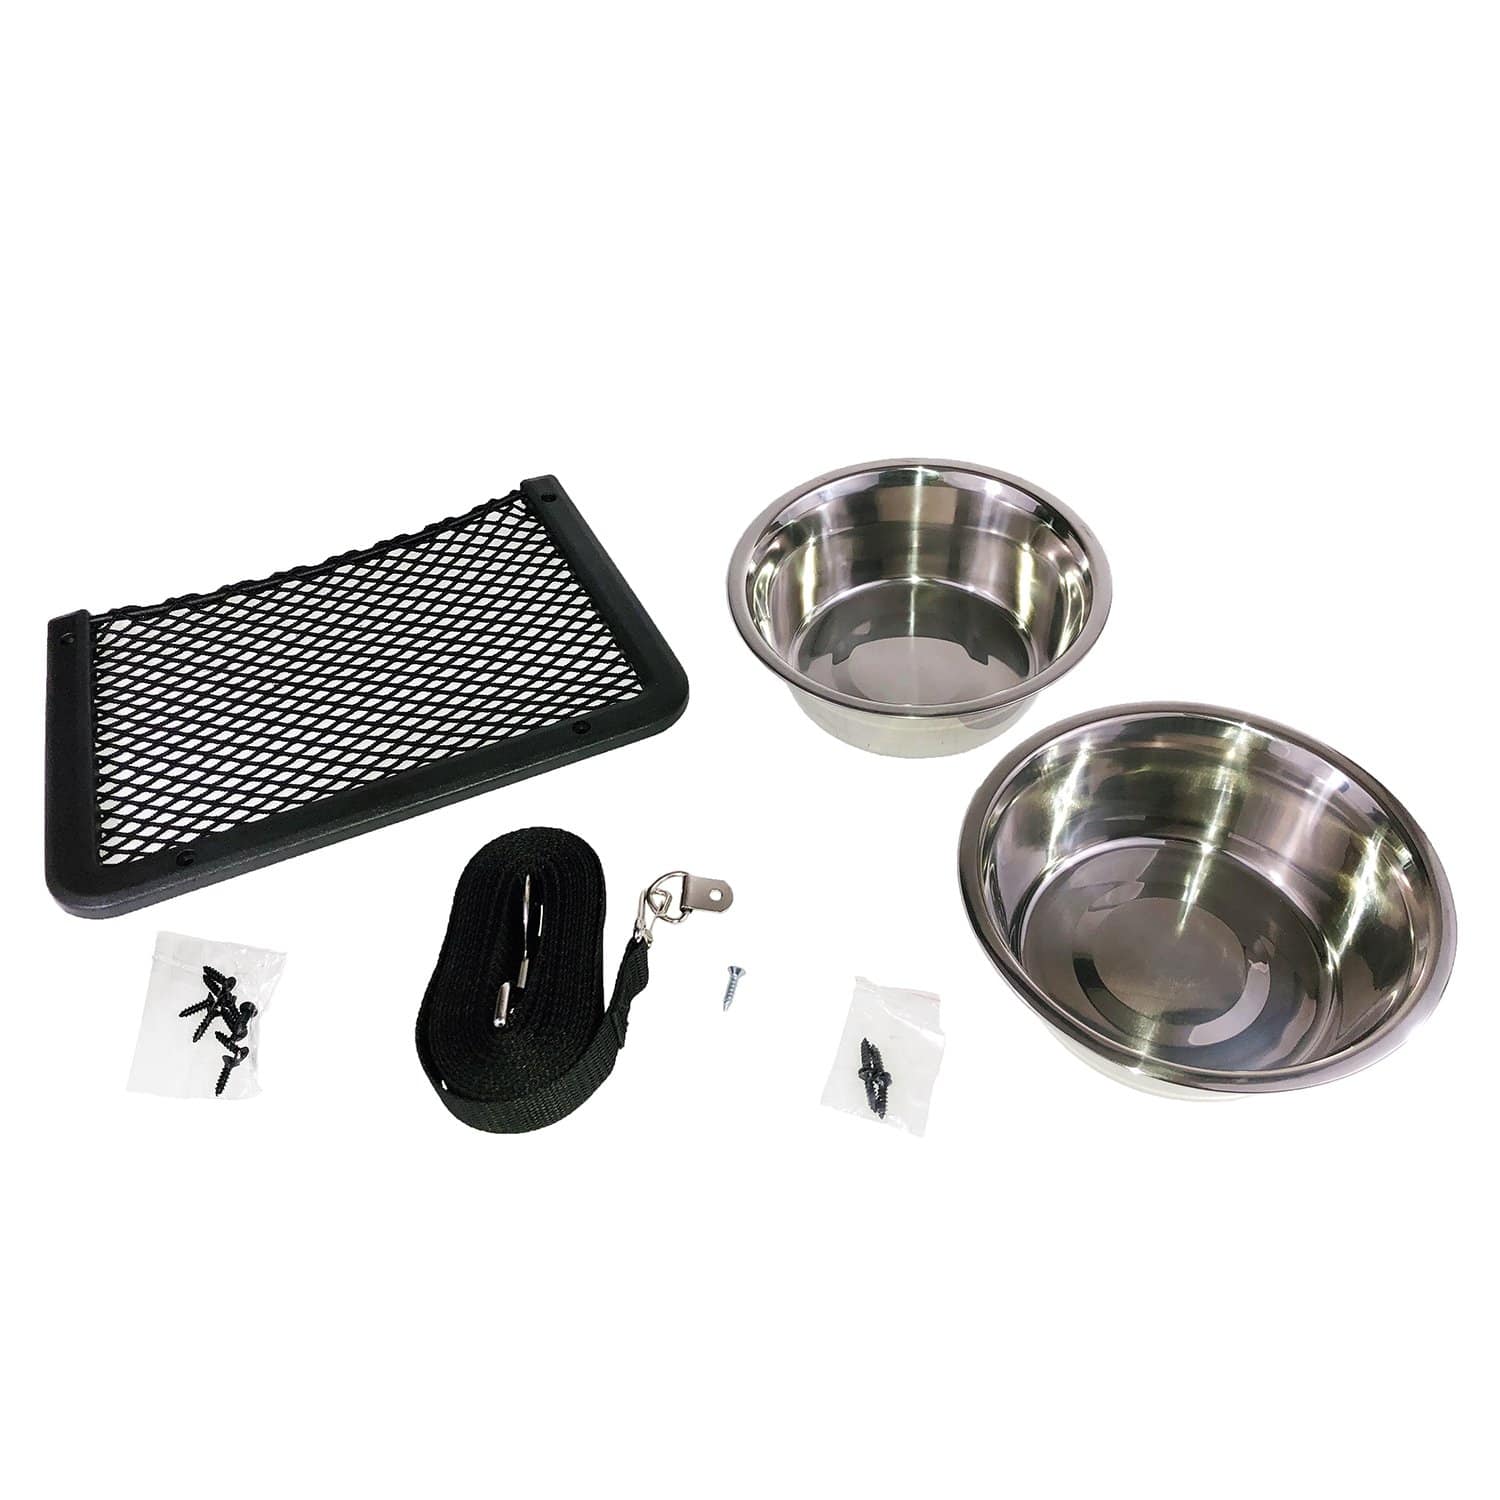 Obeco OBPR-PETSET Framed Pet Bowl Essentials Kit - 8" X 11", Black